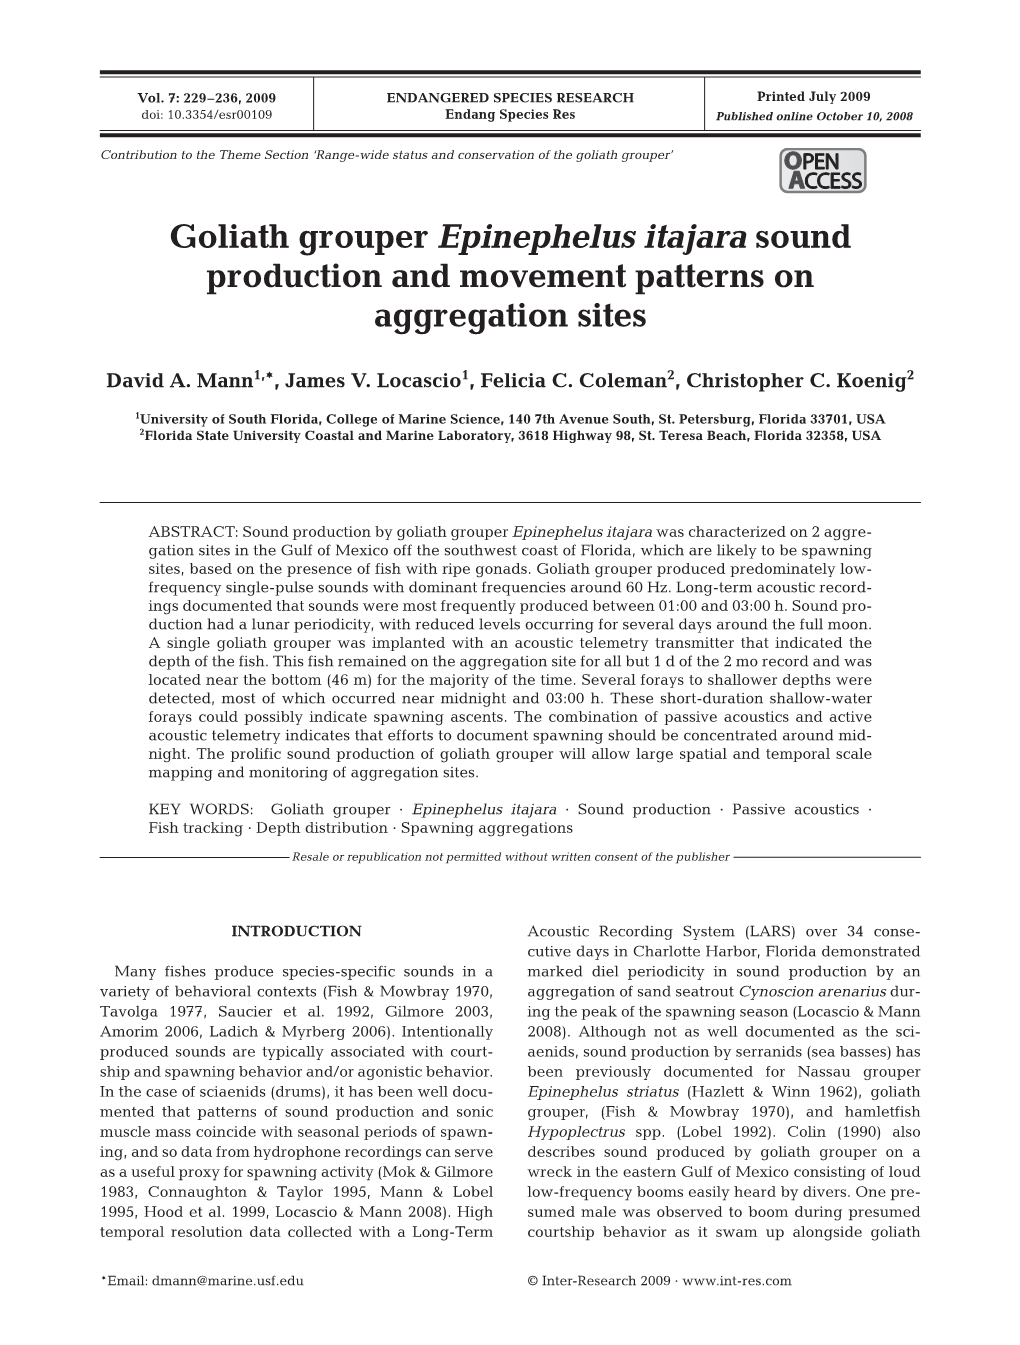 Goliath Grouper Epinephelus Itajara Sound Production and Movement Patterns on Aggregation Sites